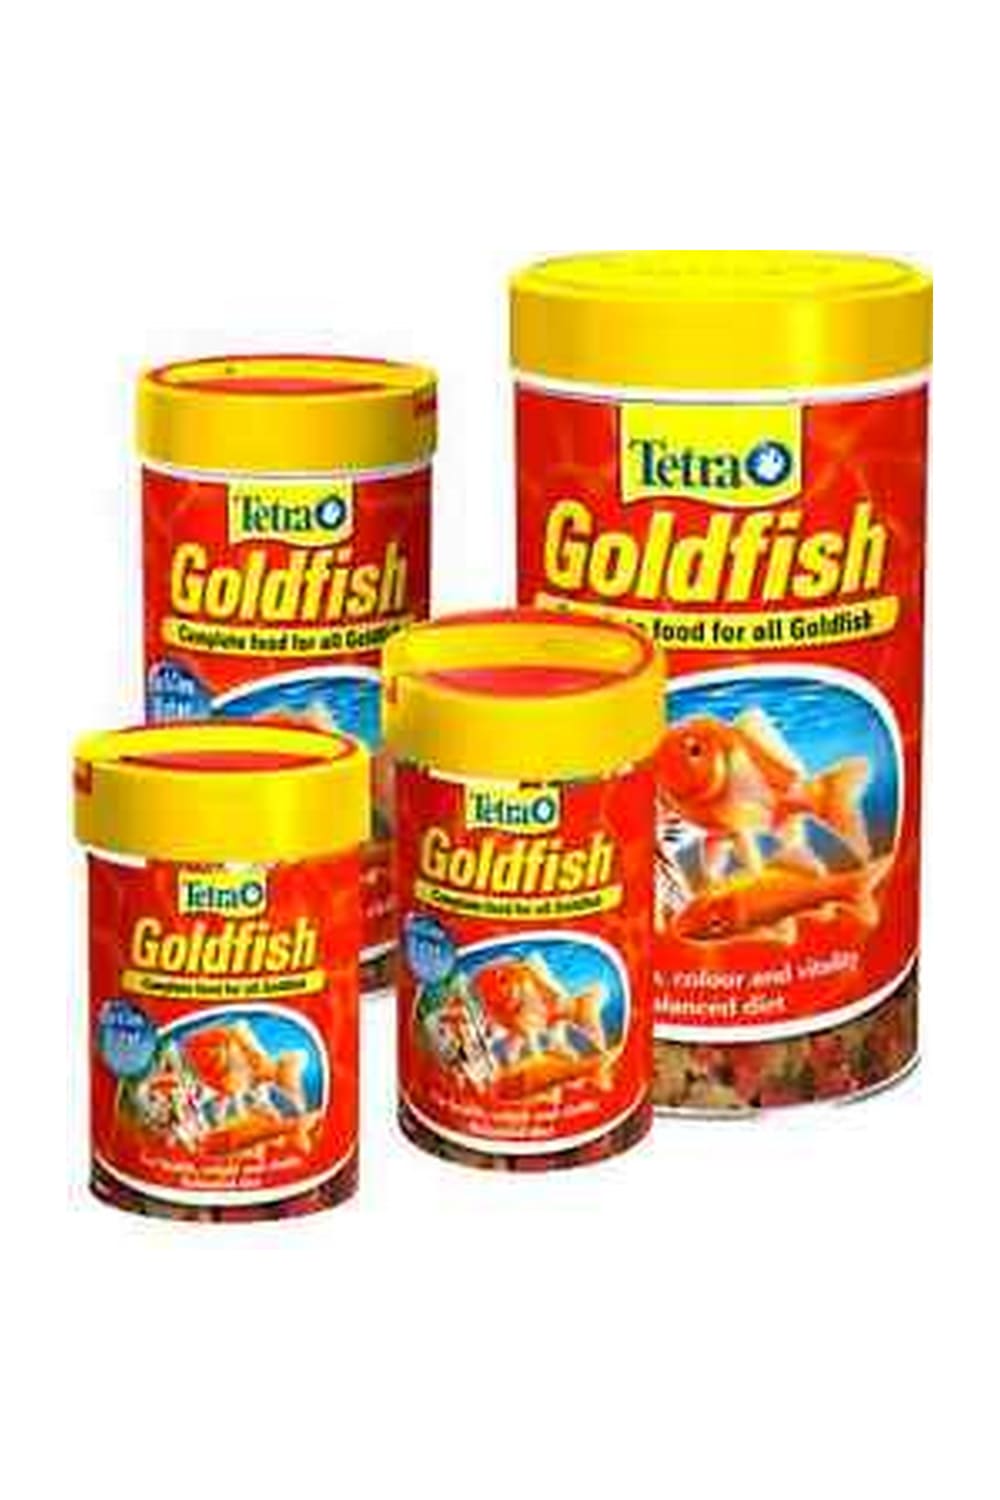 Tetra Goldfish Fish Food (May Vary) (3.53 oz)